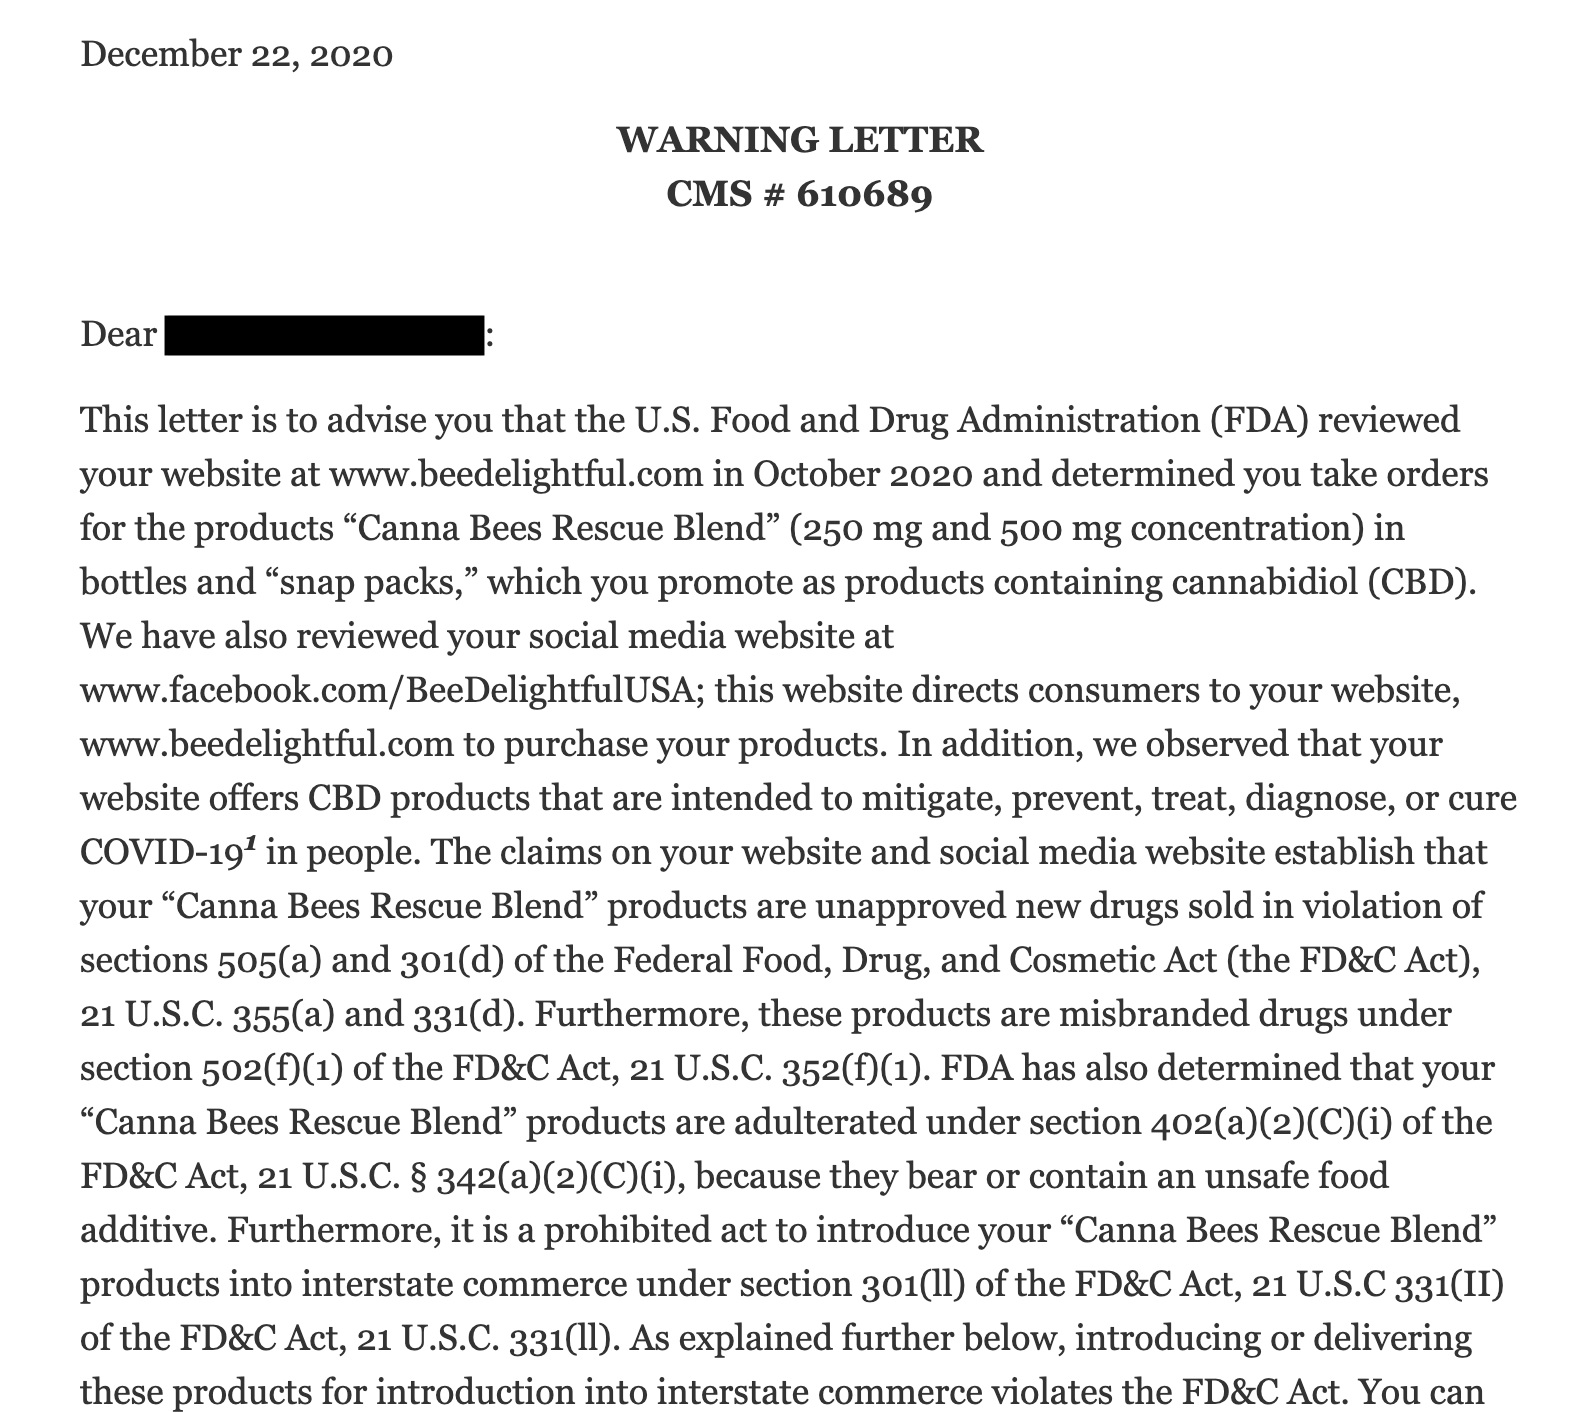 Example of FDA Advertising Warning Letter